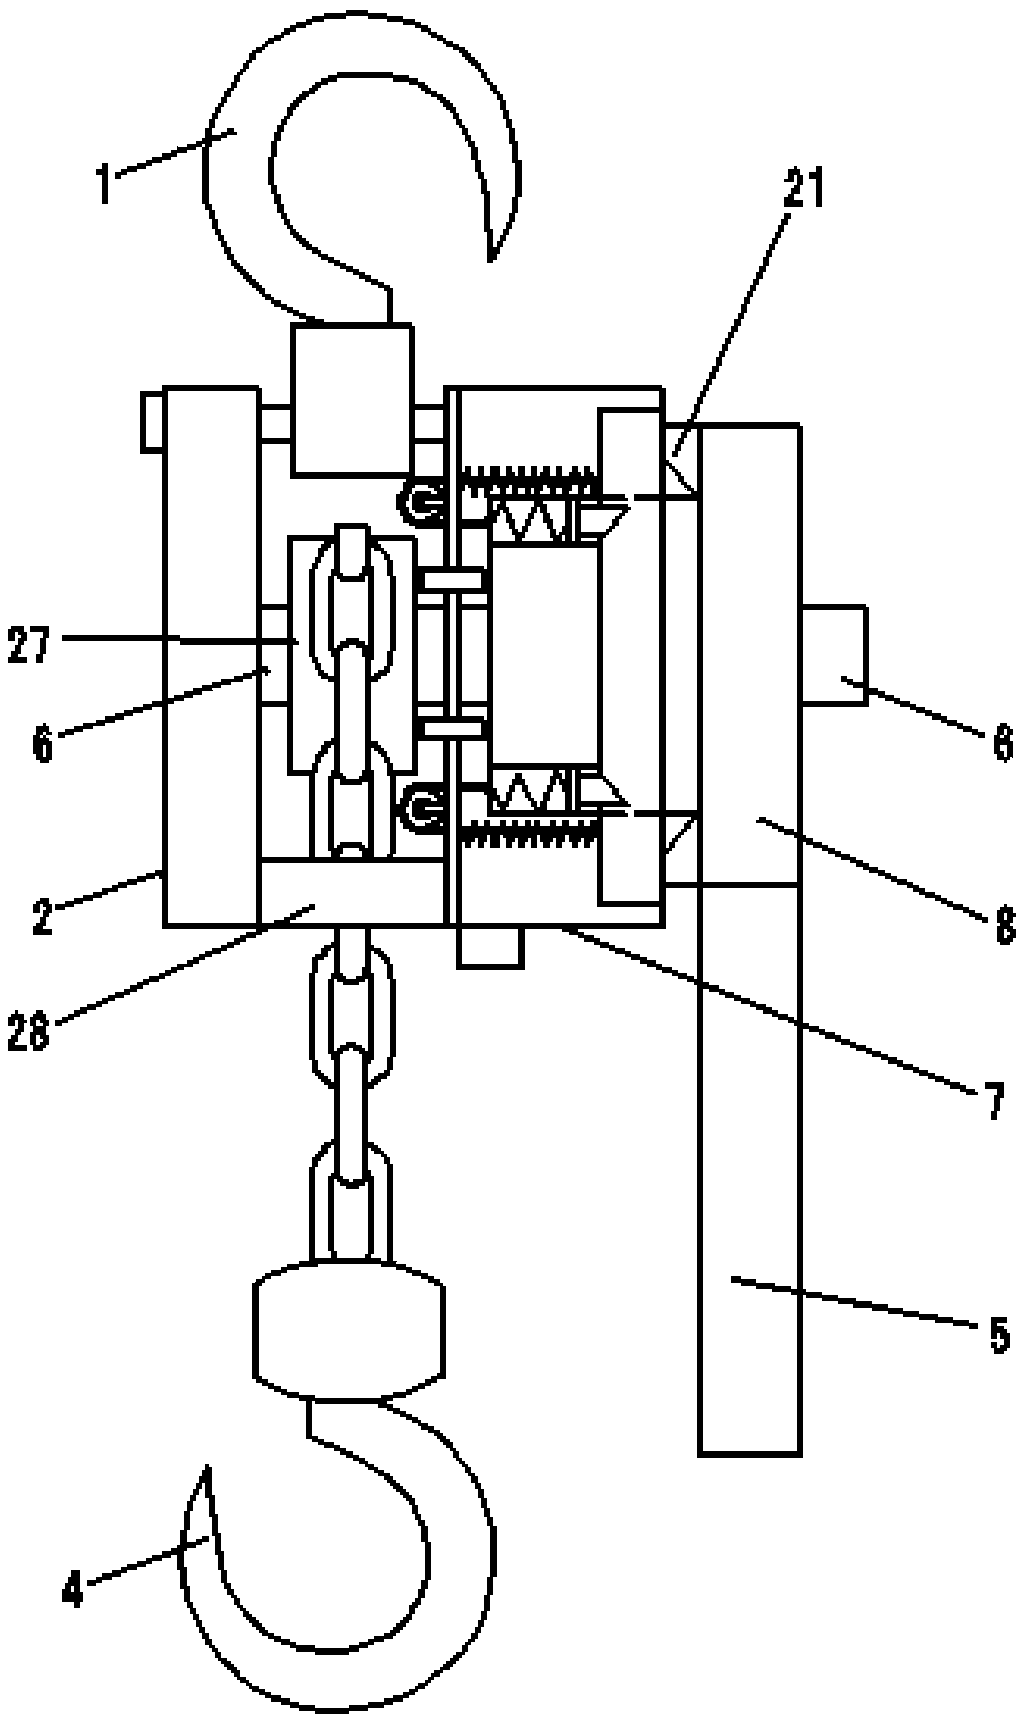 A brake clutch structure of a lever hoist